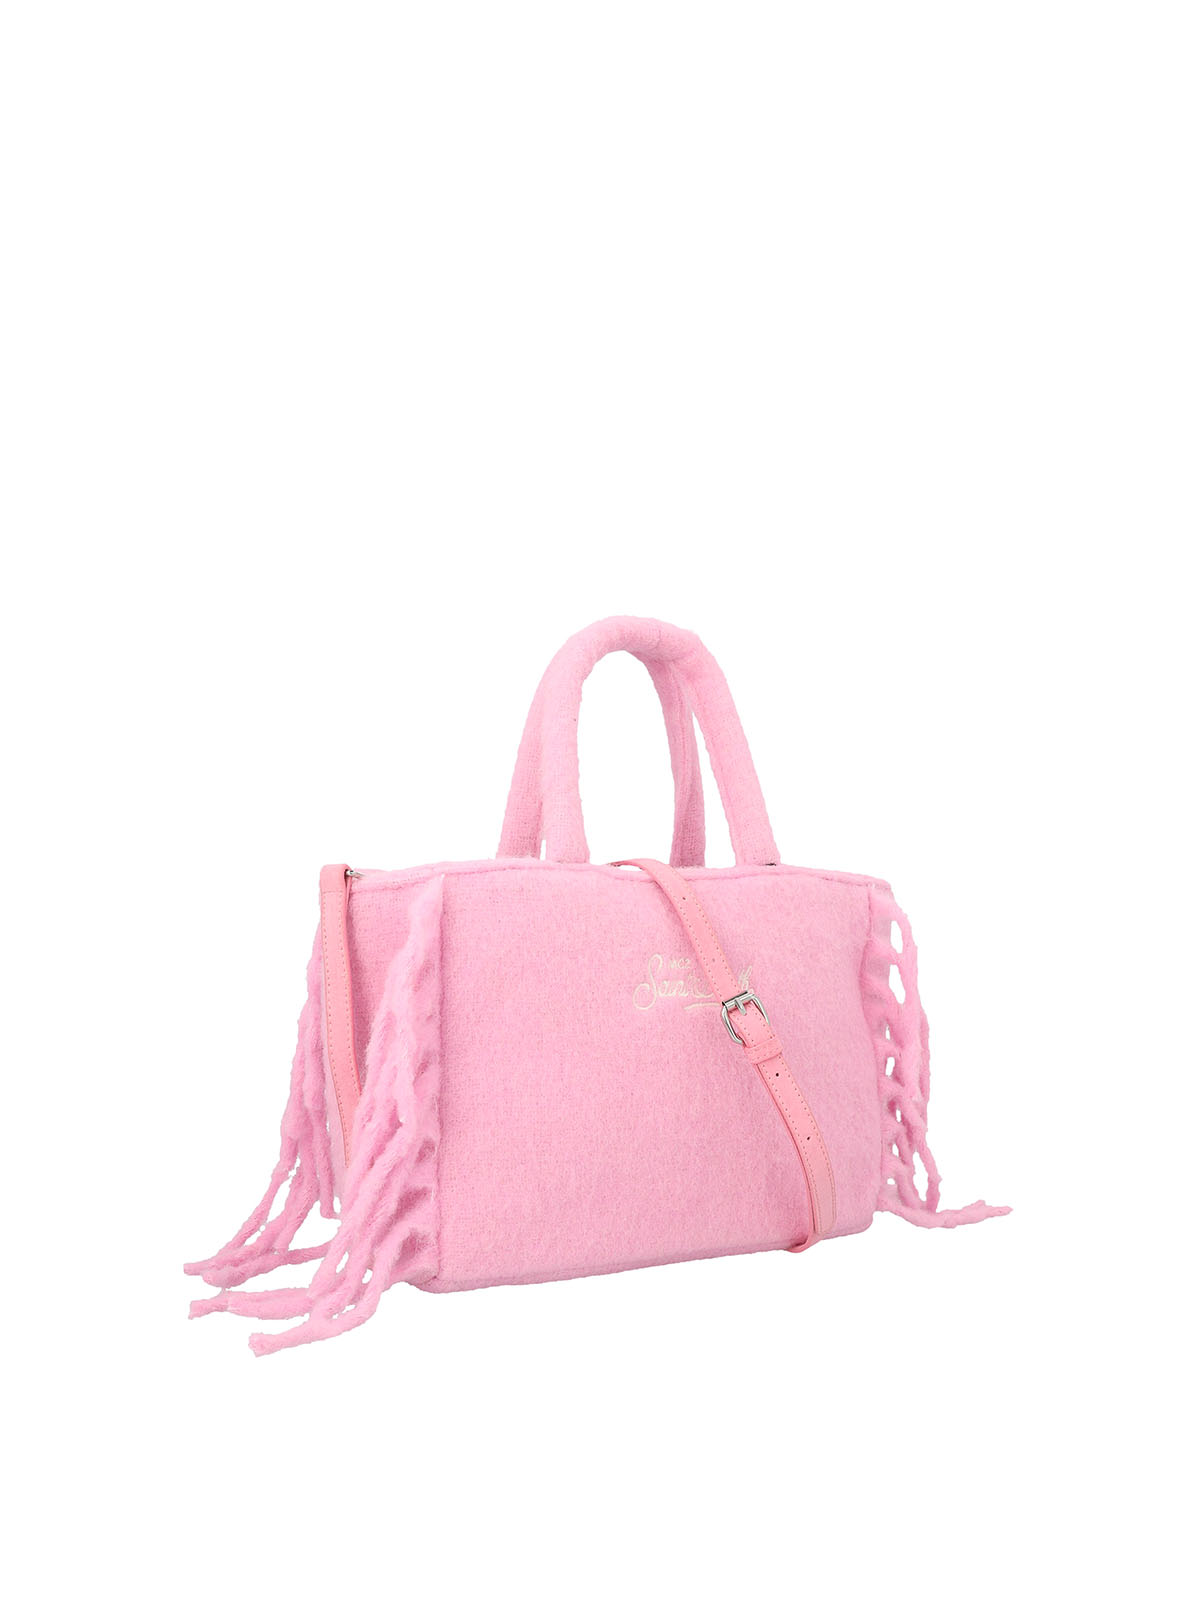 saint barth bag pink